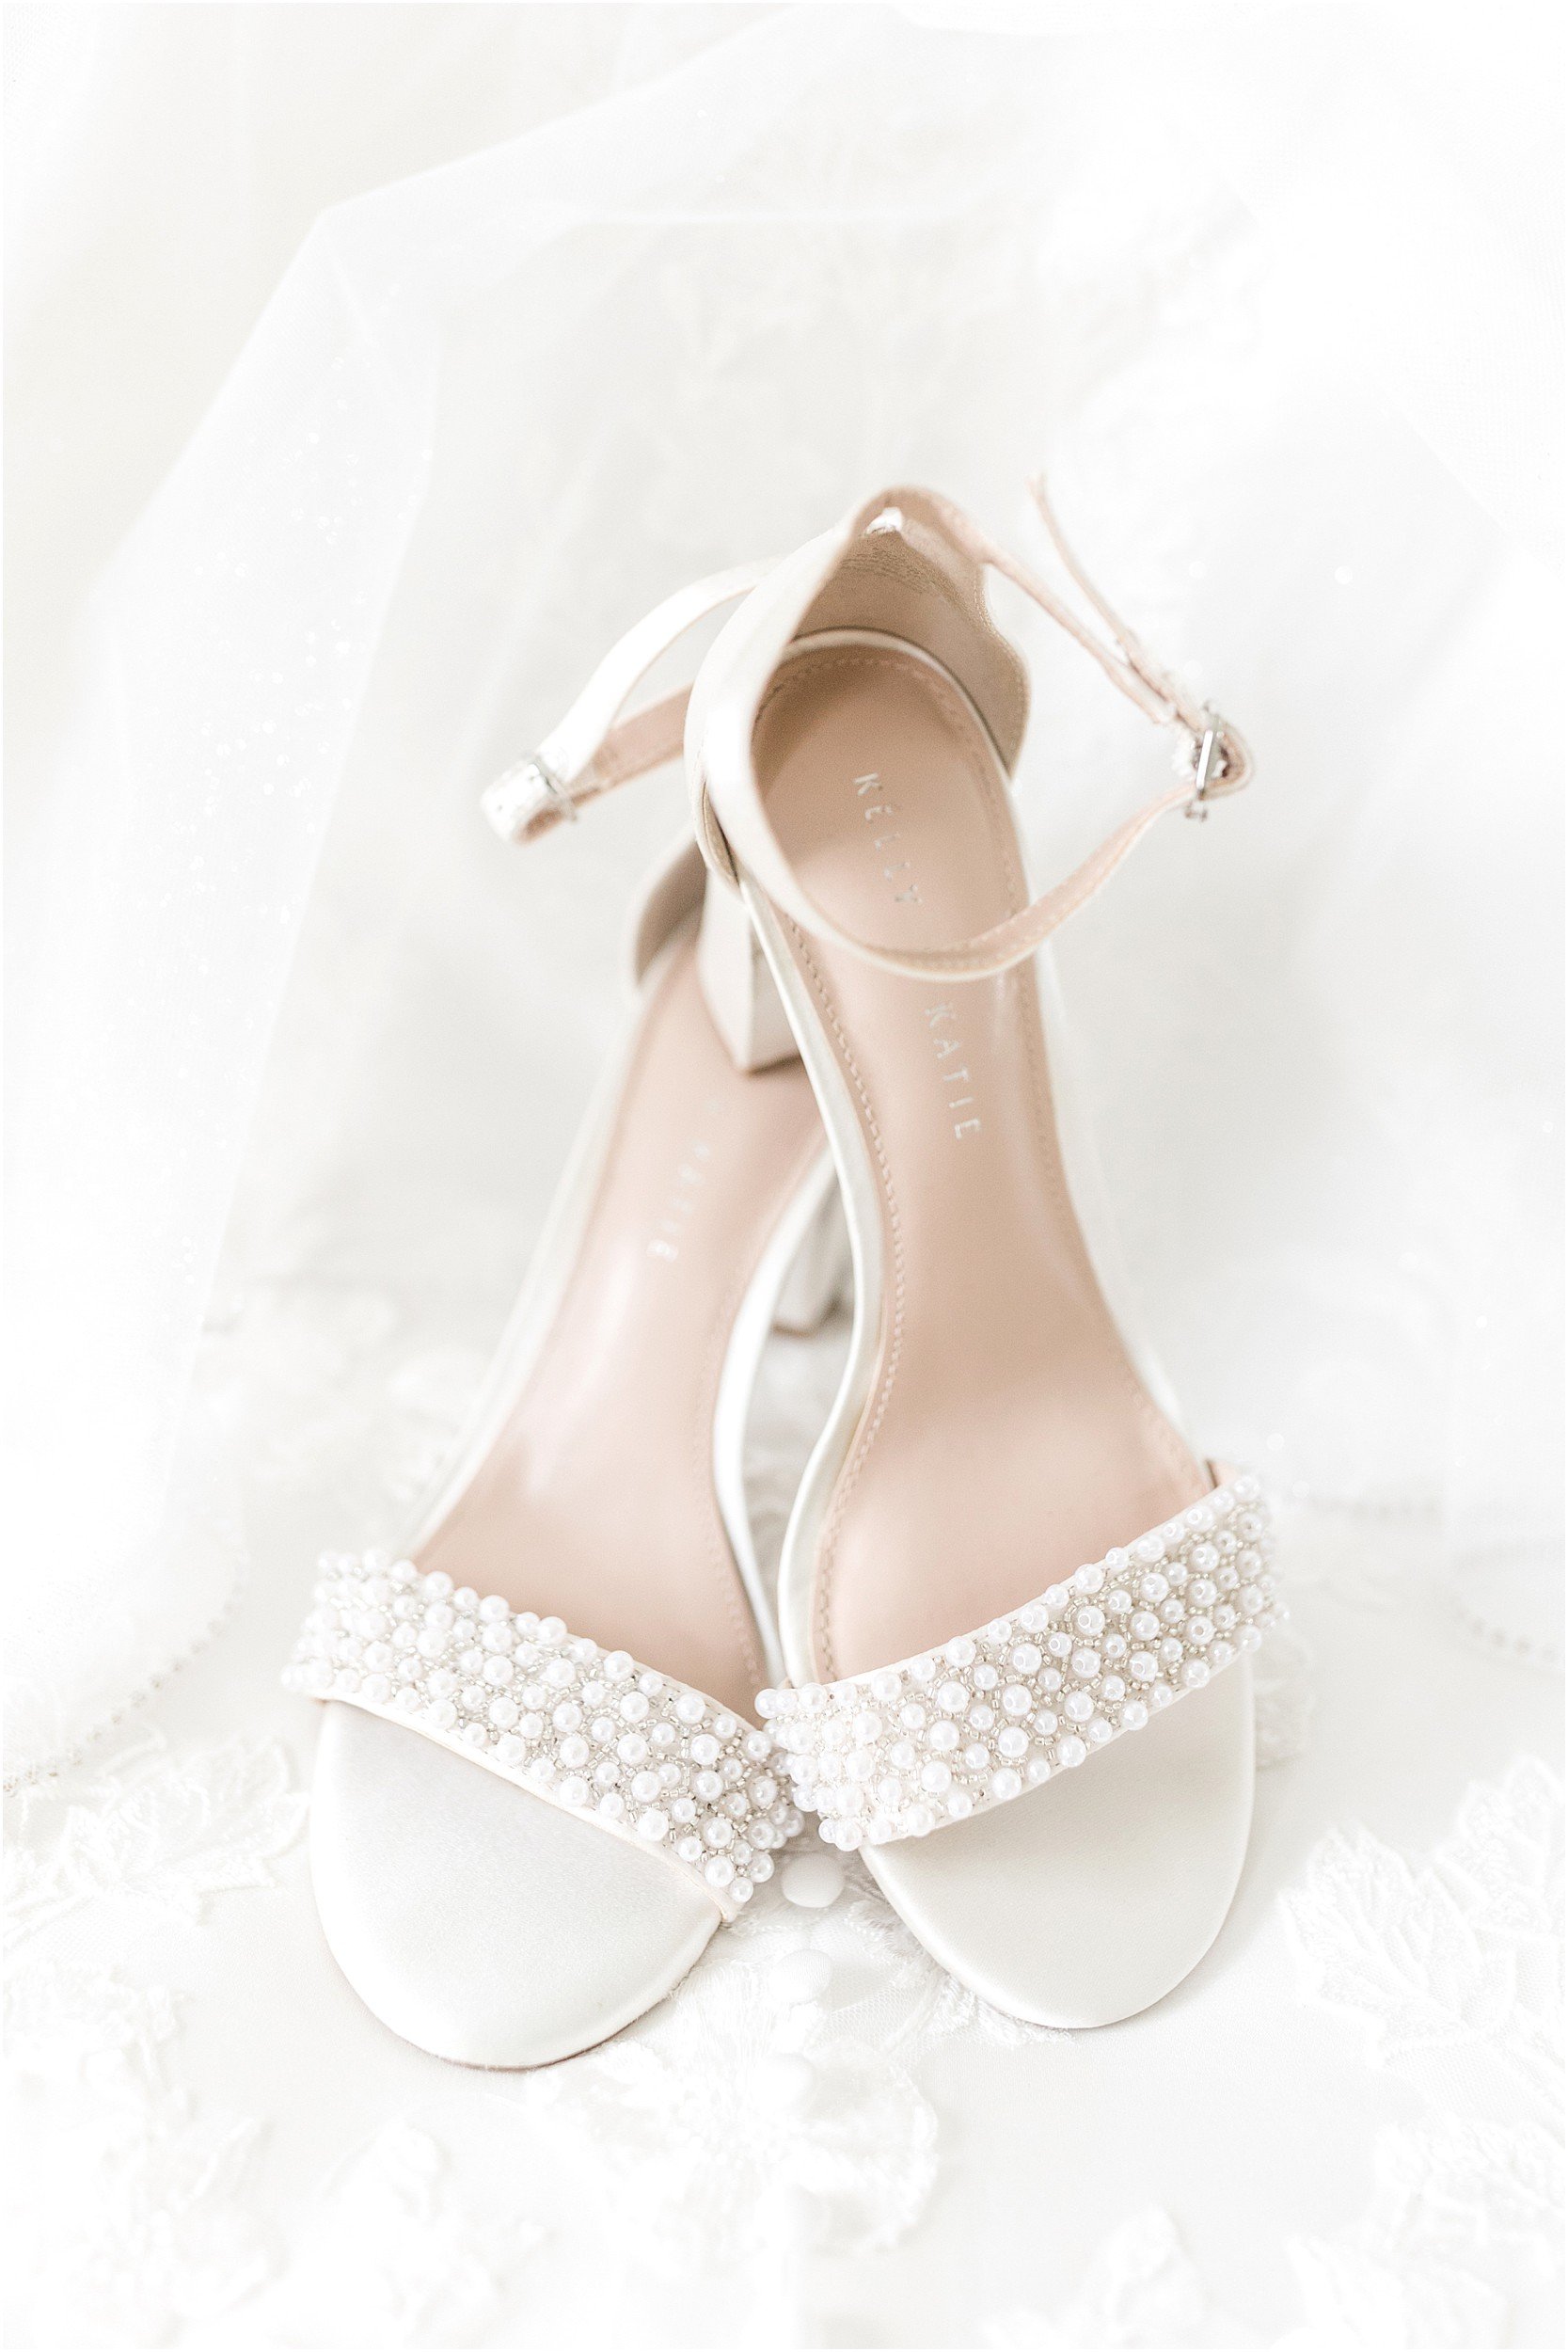 D'Addario Wedding HIGHLIGHTS-52_Belmont-Manor-Maryland-wedding-photographer-annagracephotography.jpg